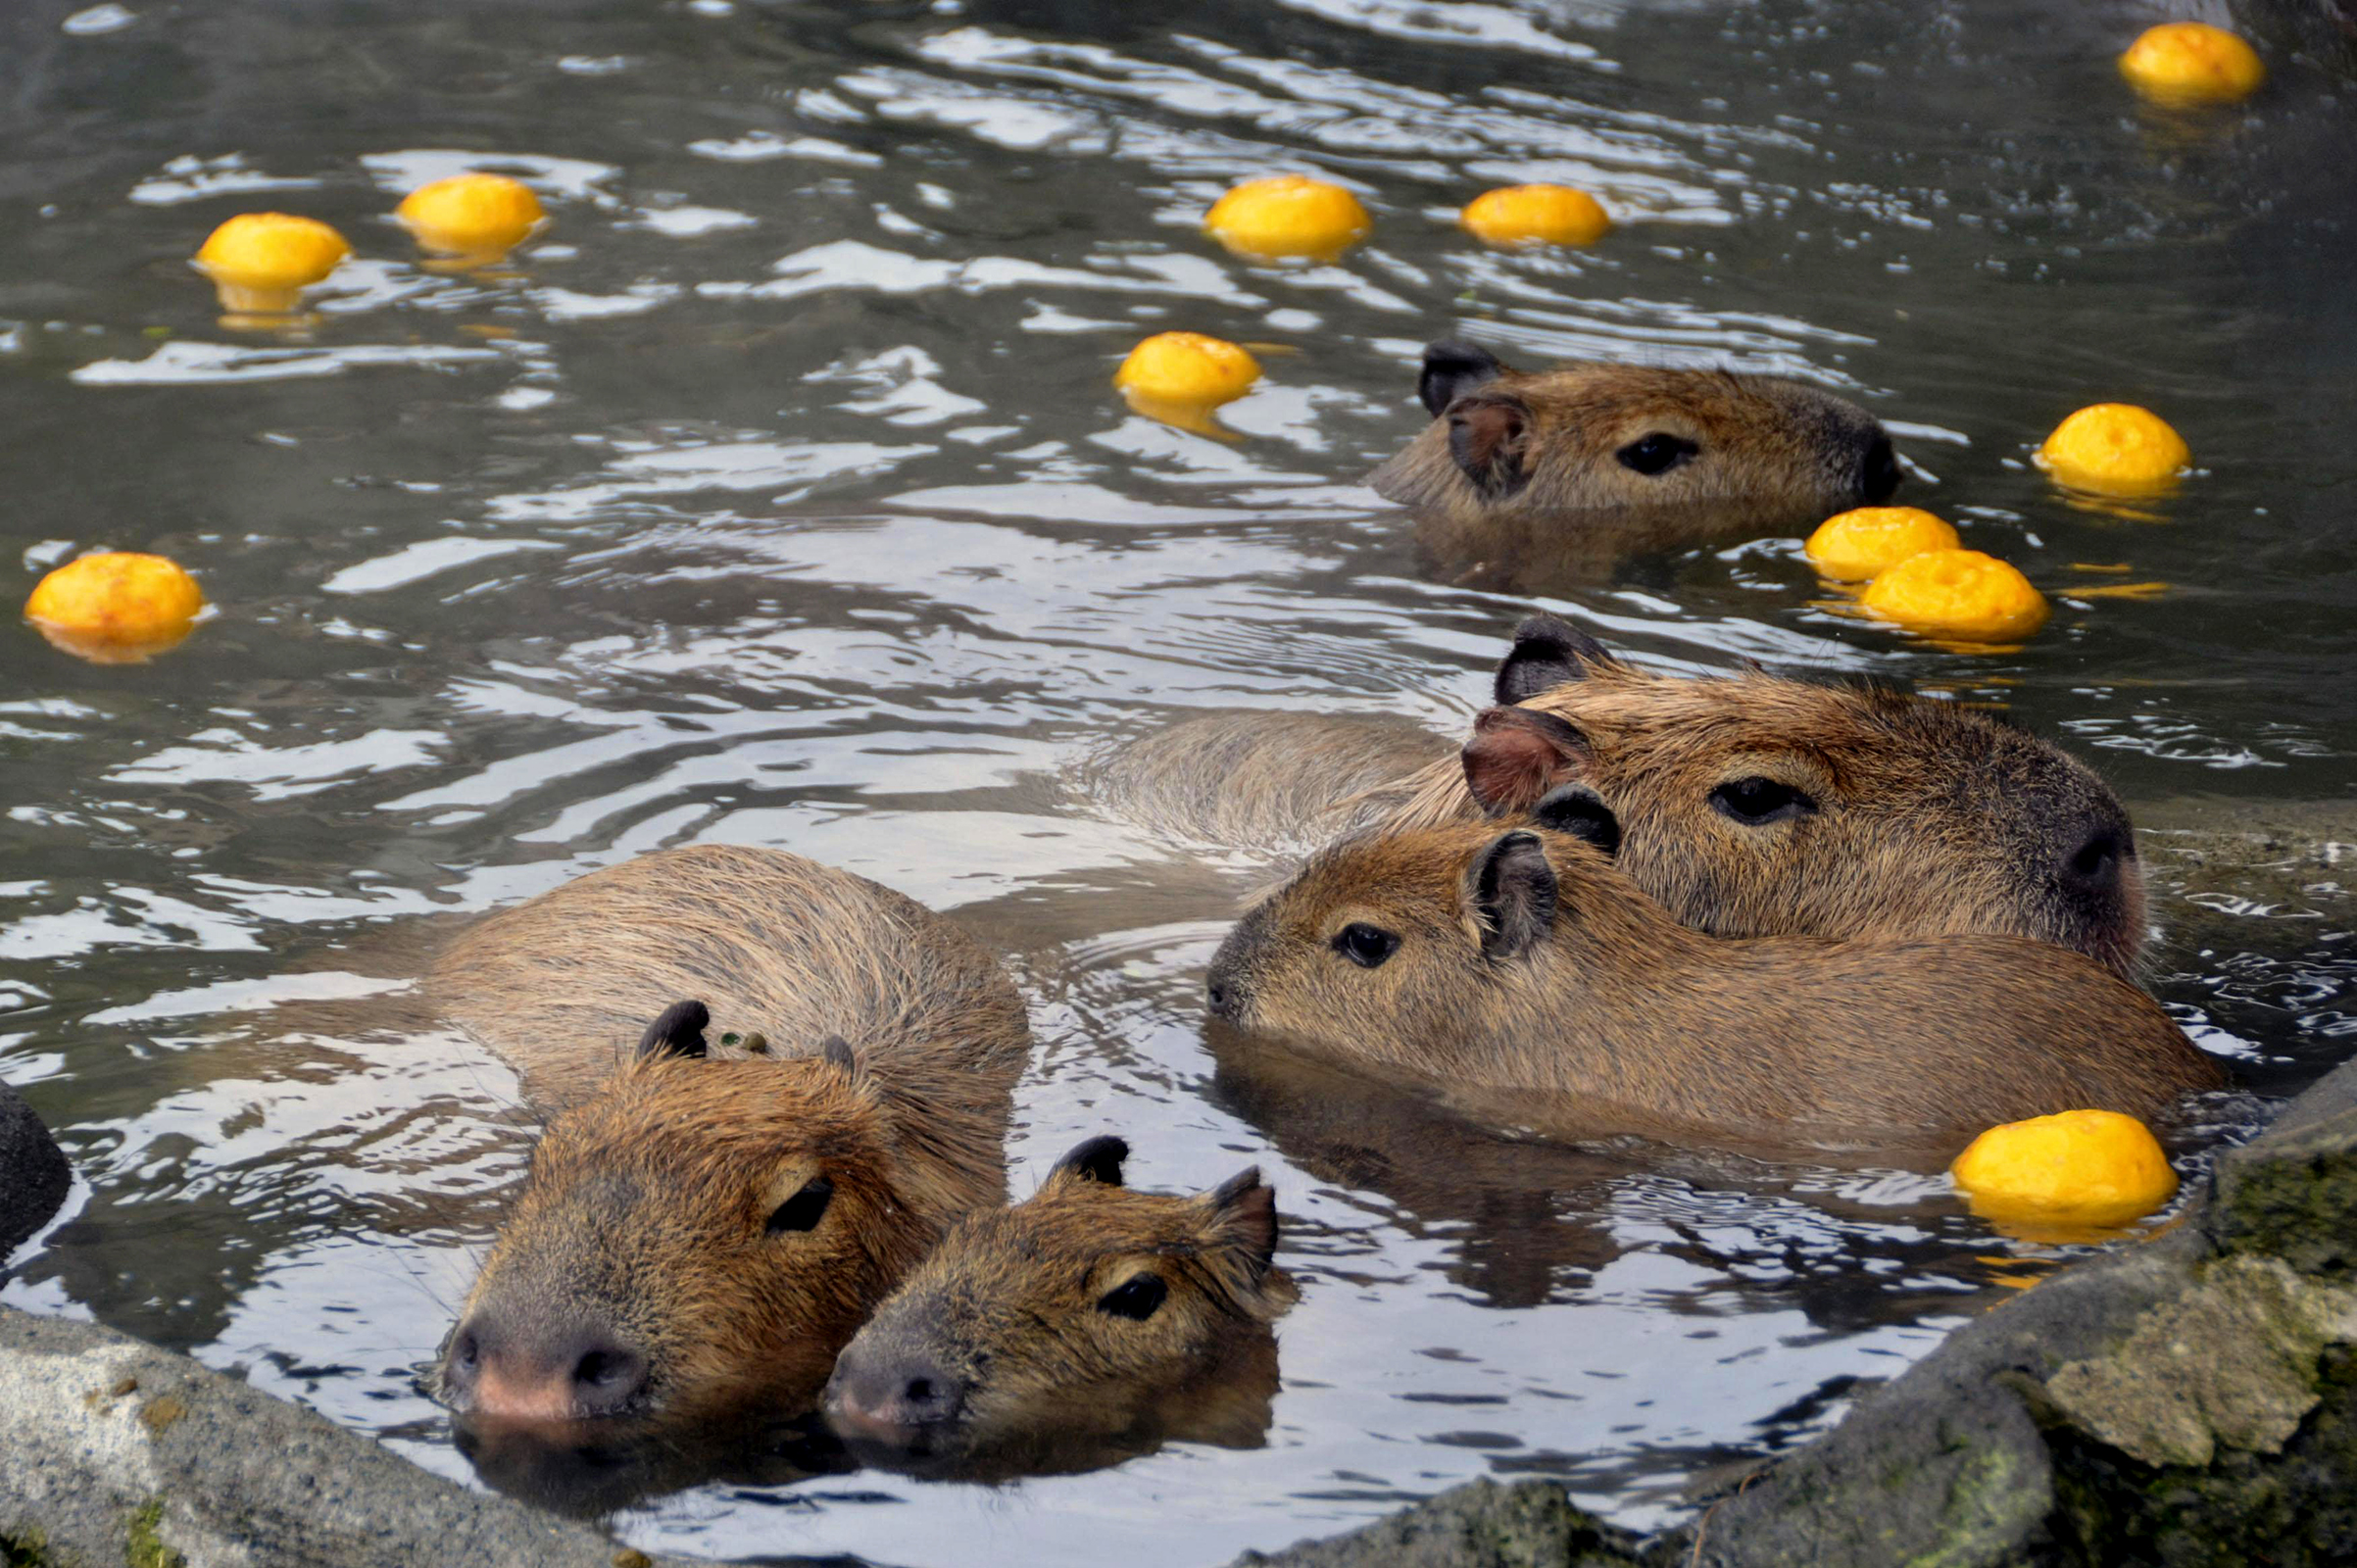 A pair of adult capybara and three babies take a yuzu-yu, or a hot bath with yuzu citrus fruits, a winter solstice ritual in Japan. (Noriaki Sasaki—The Yomiuri Shimbun/AP)